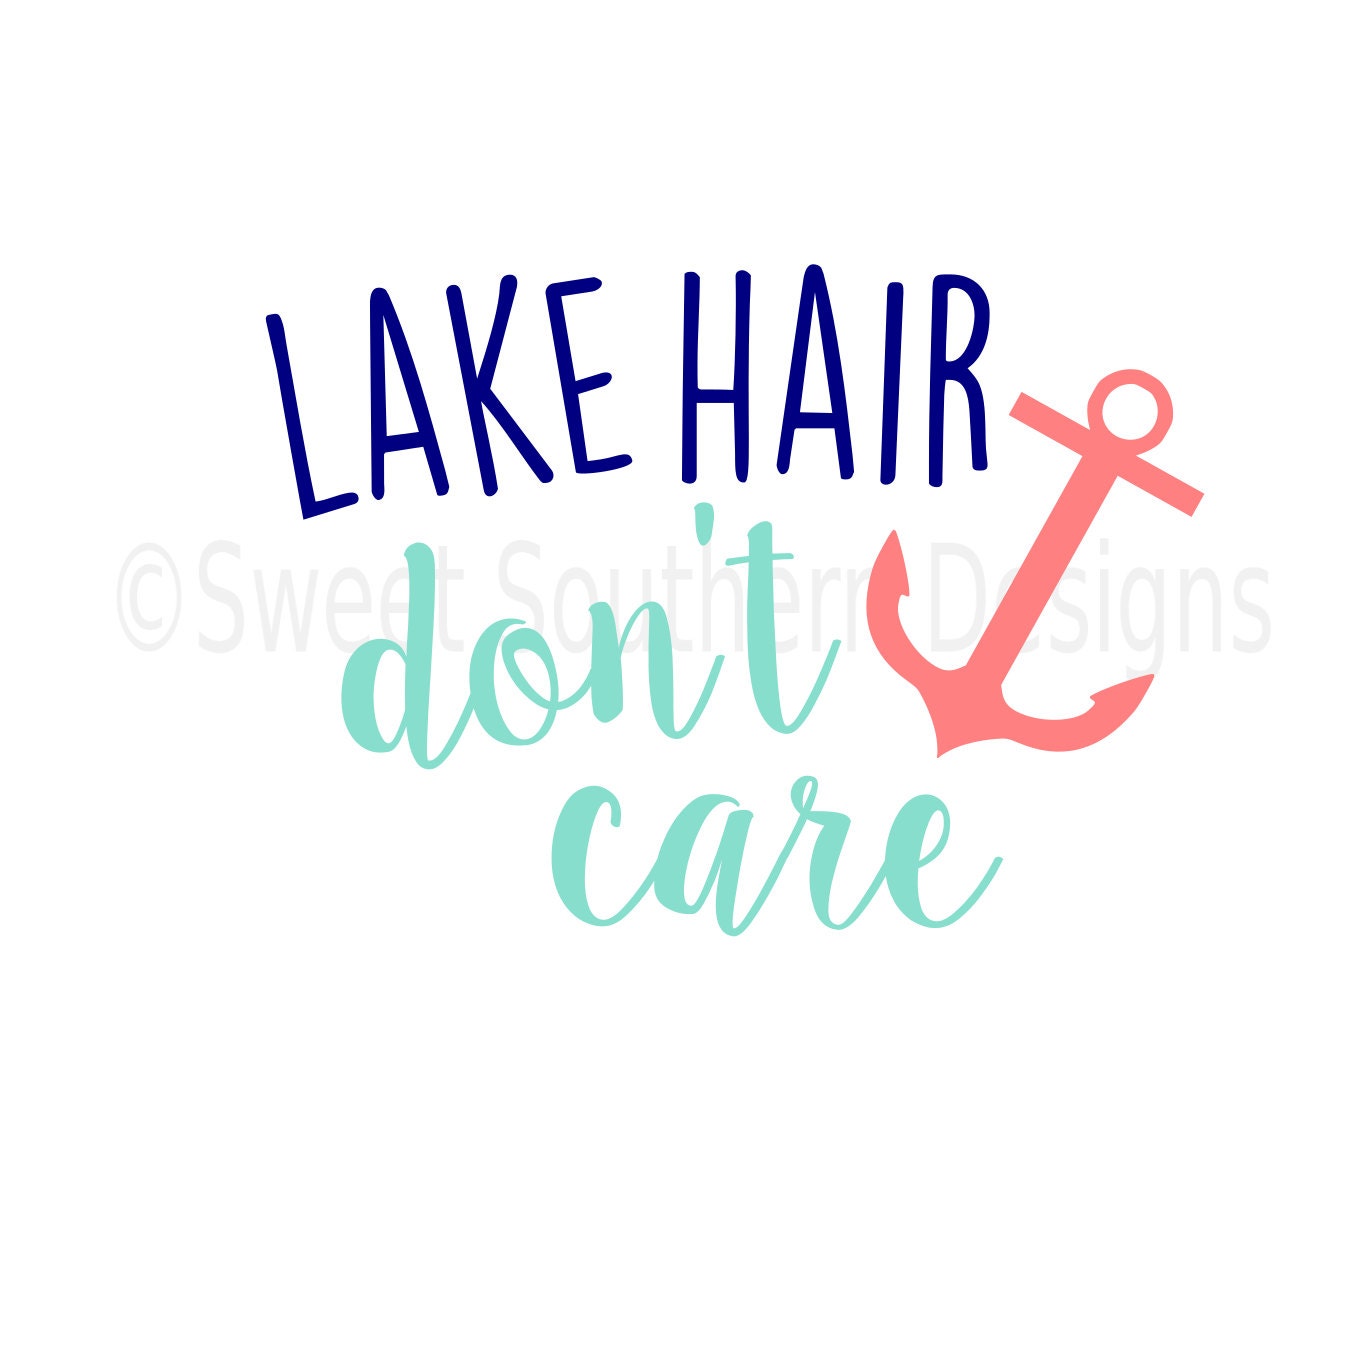 Download Lake hair don't care SVG PDF instant download design for